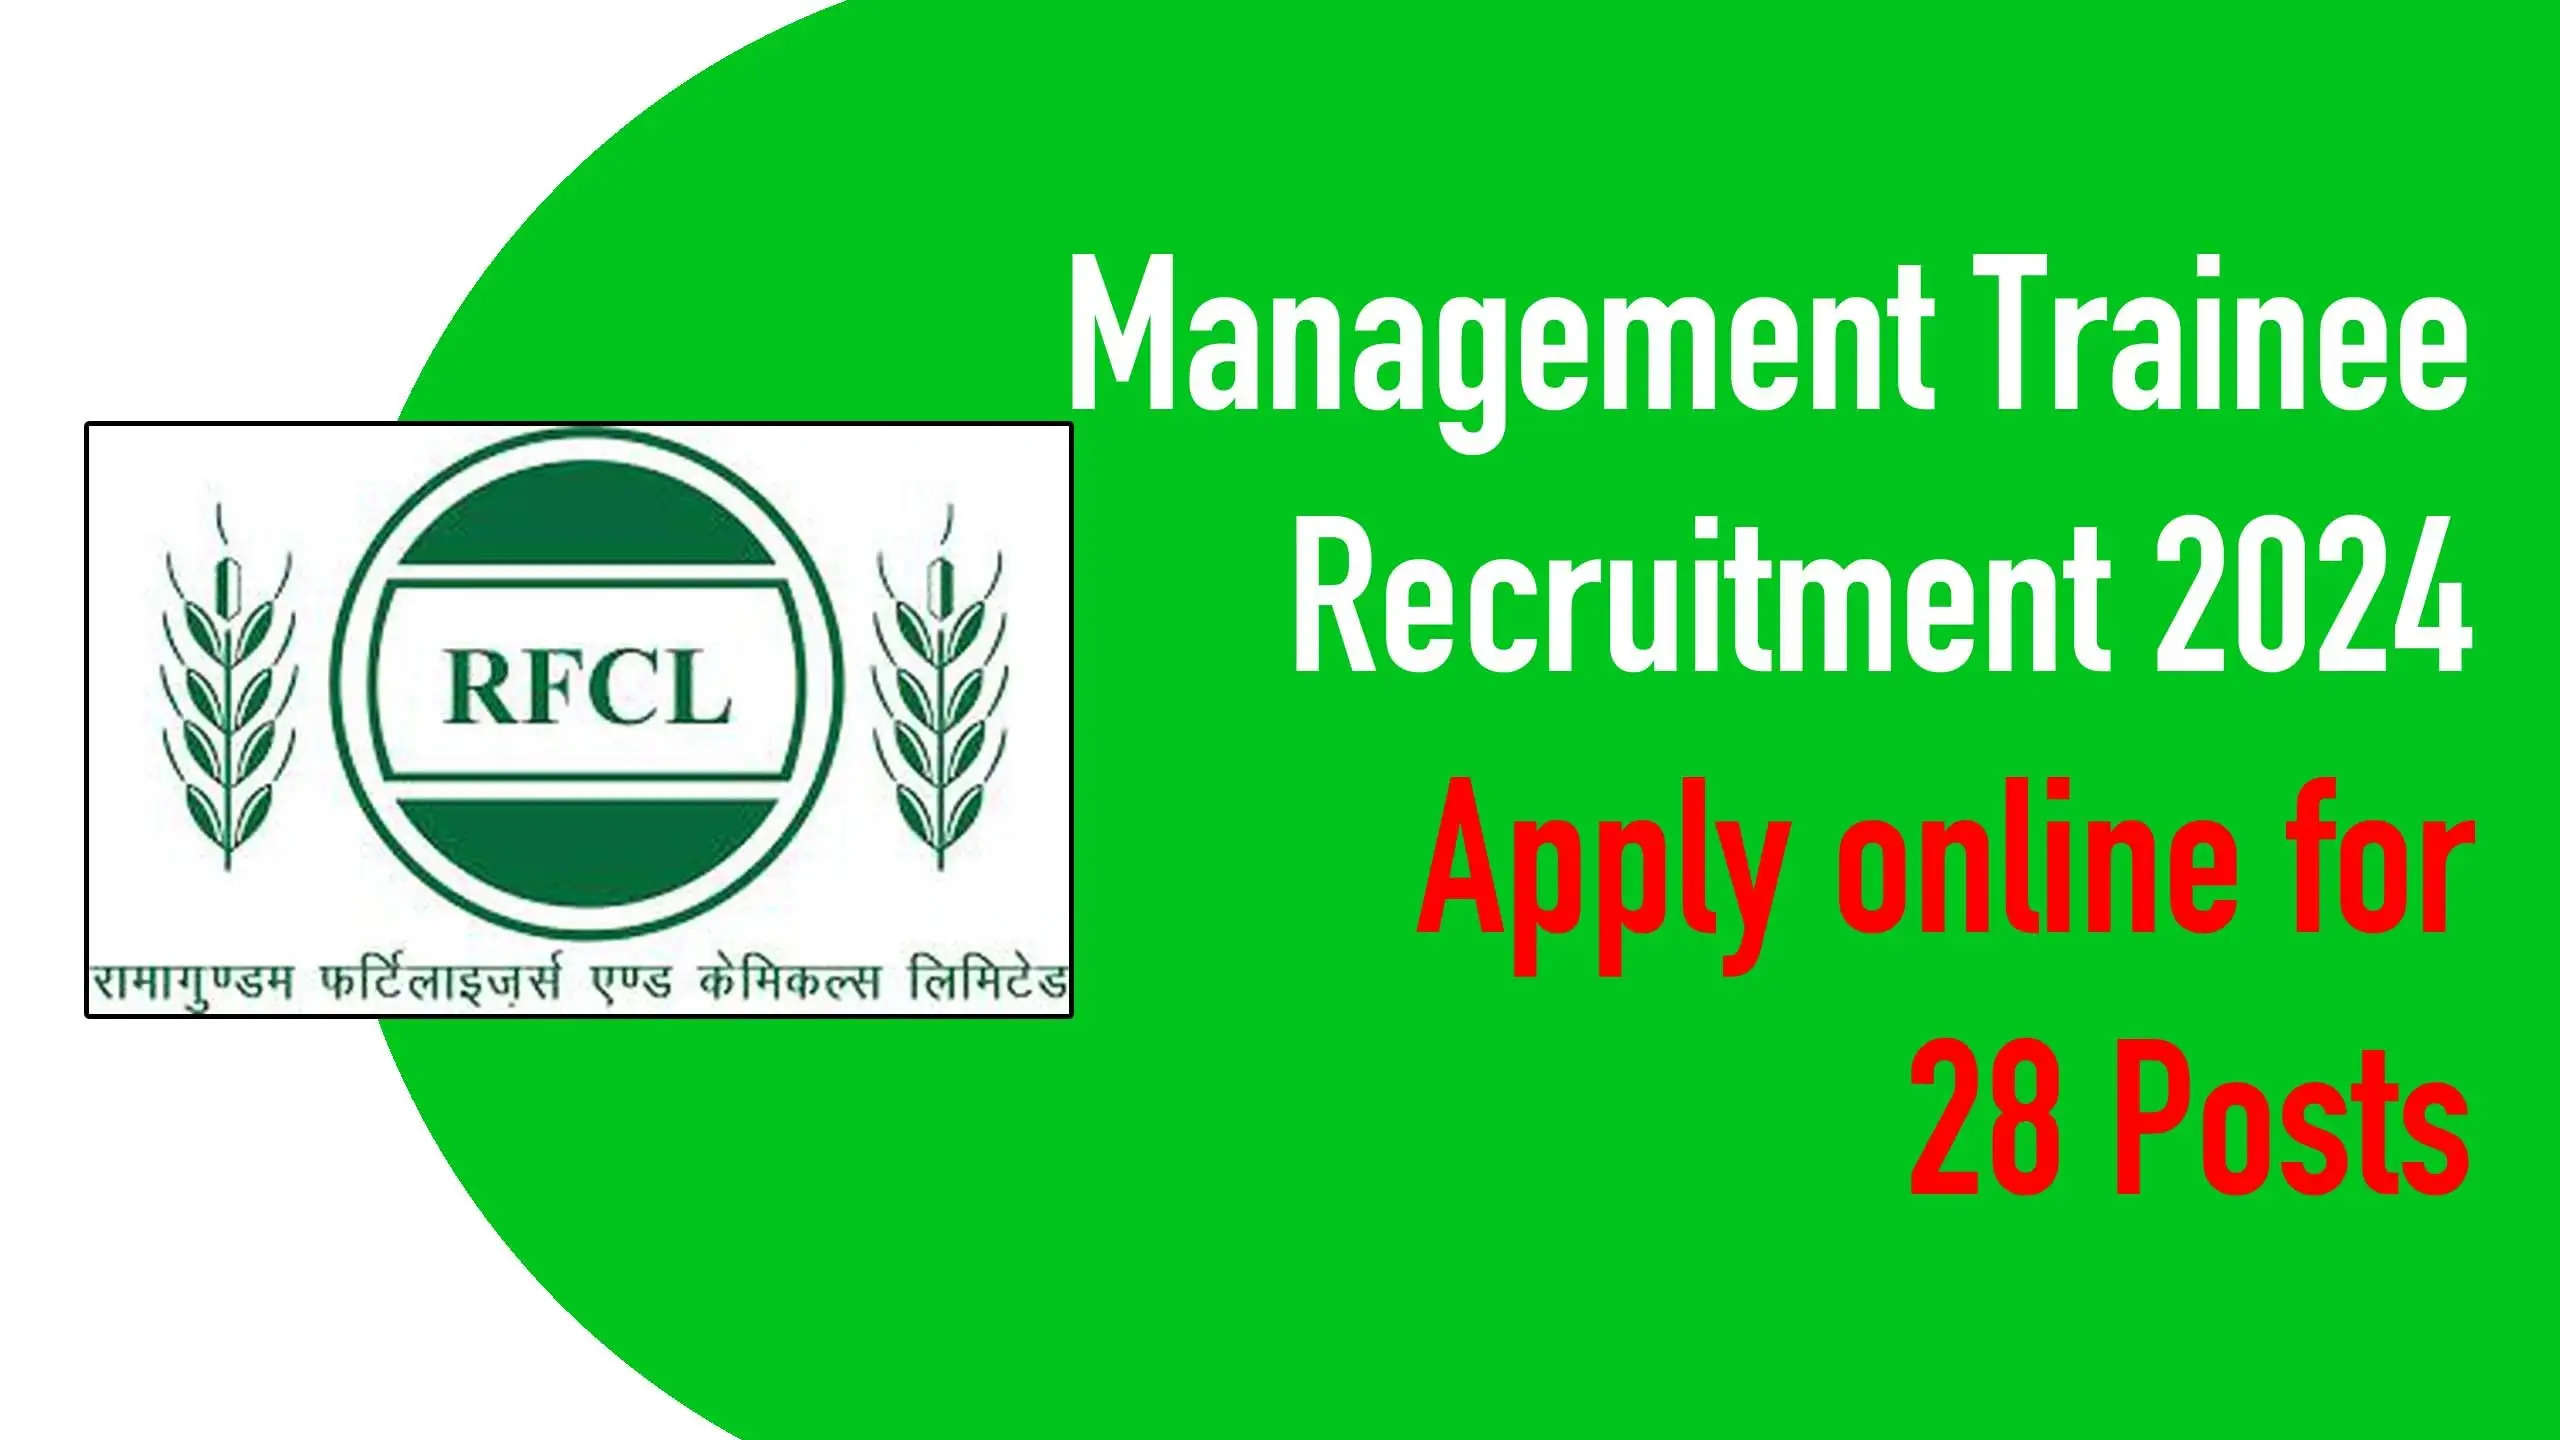 RFCL Announces Management Trainee Recruitment 2024: Apply Now for 28 Vacancies, Verify Your Eligibility